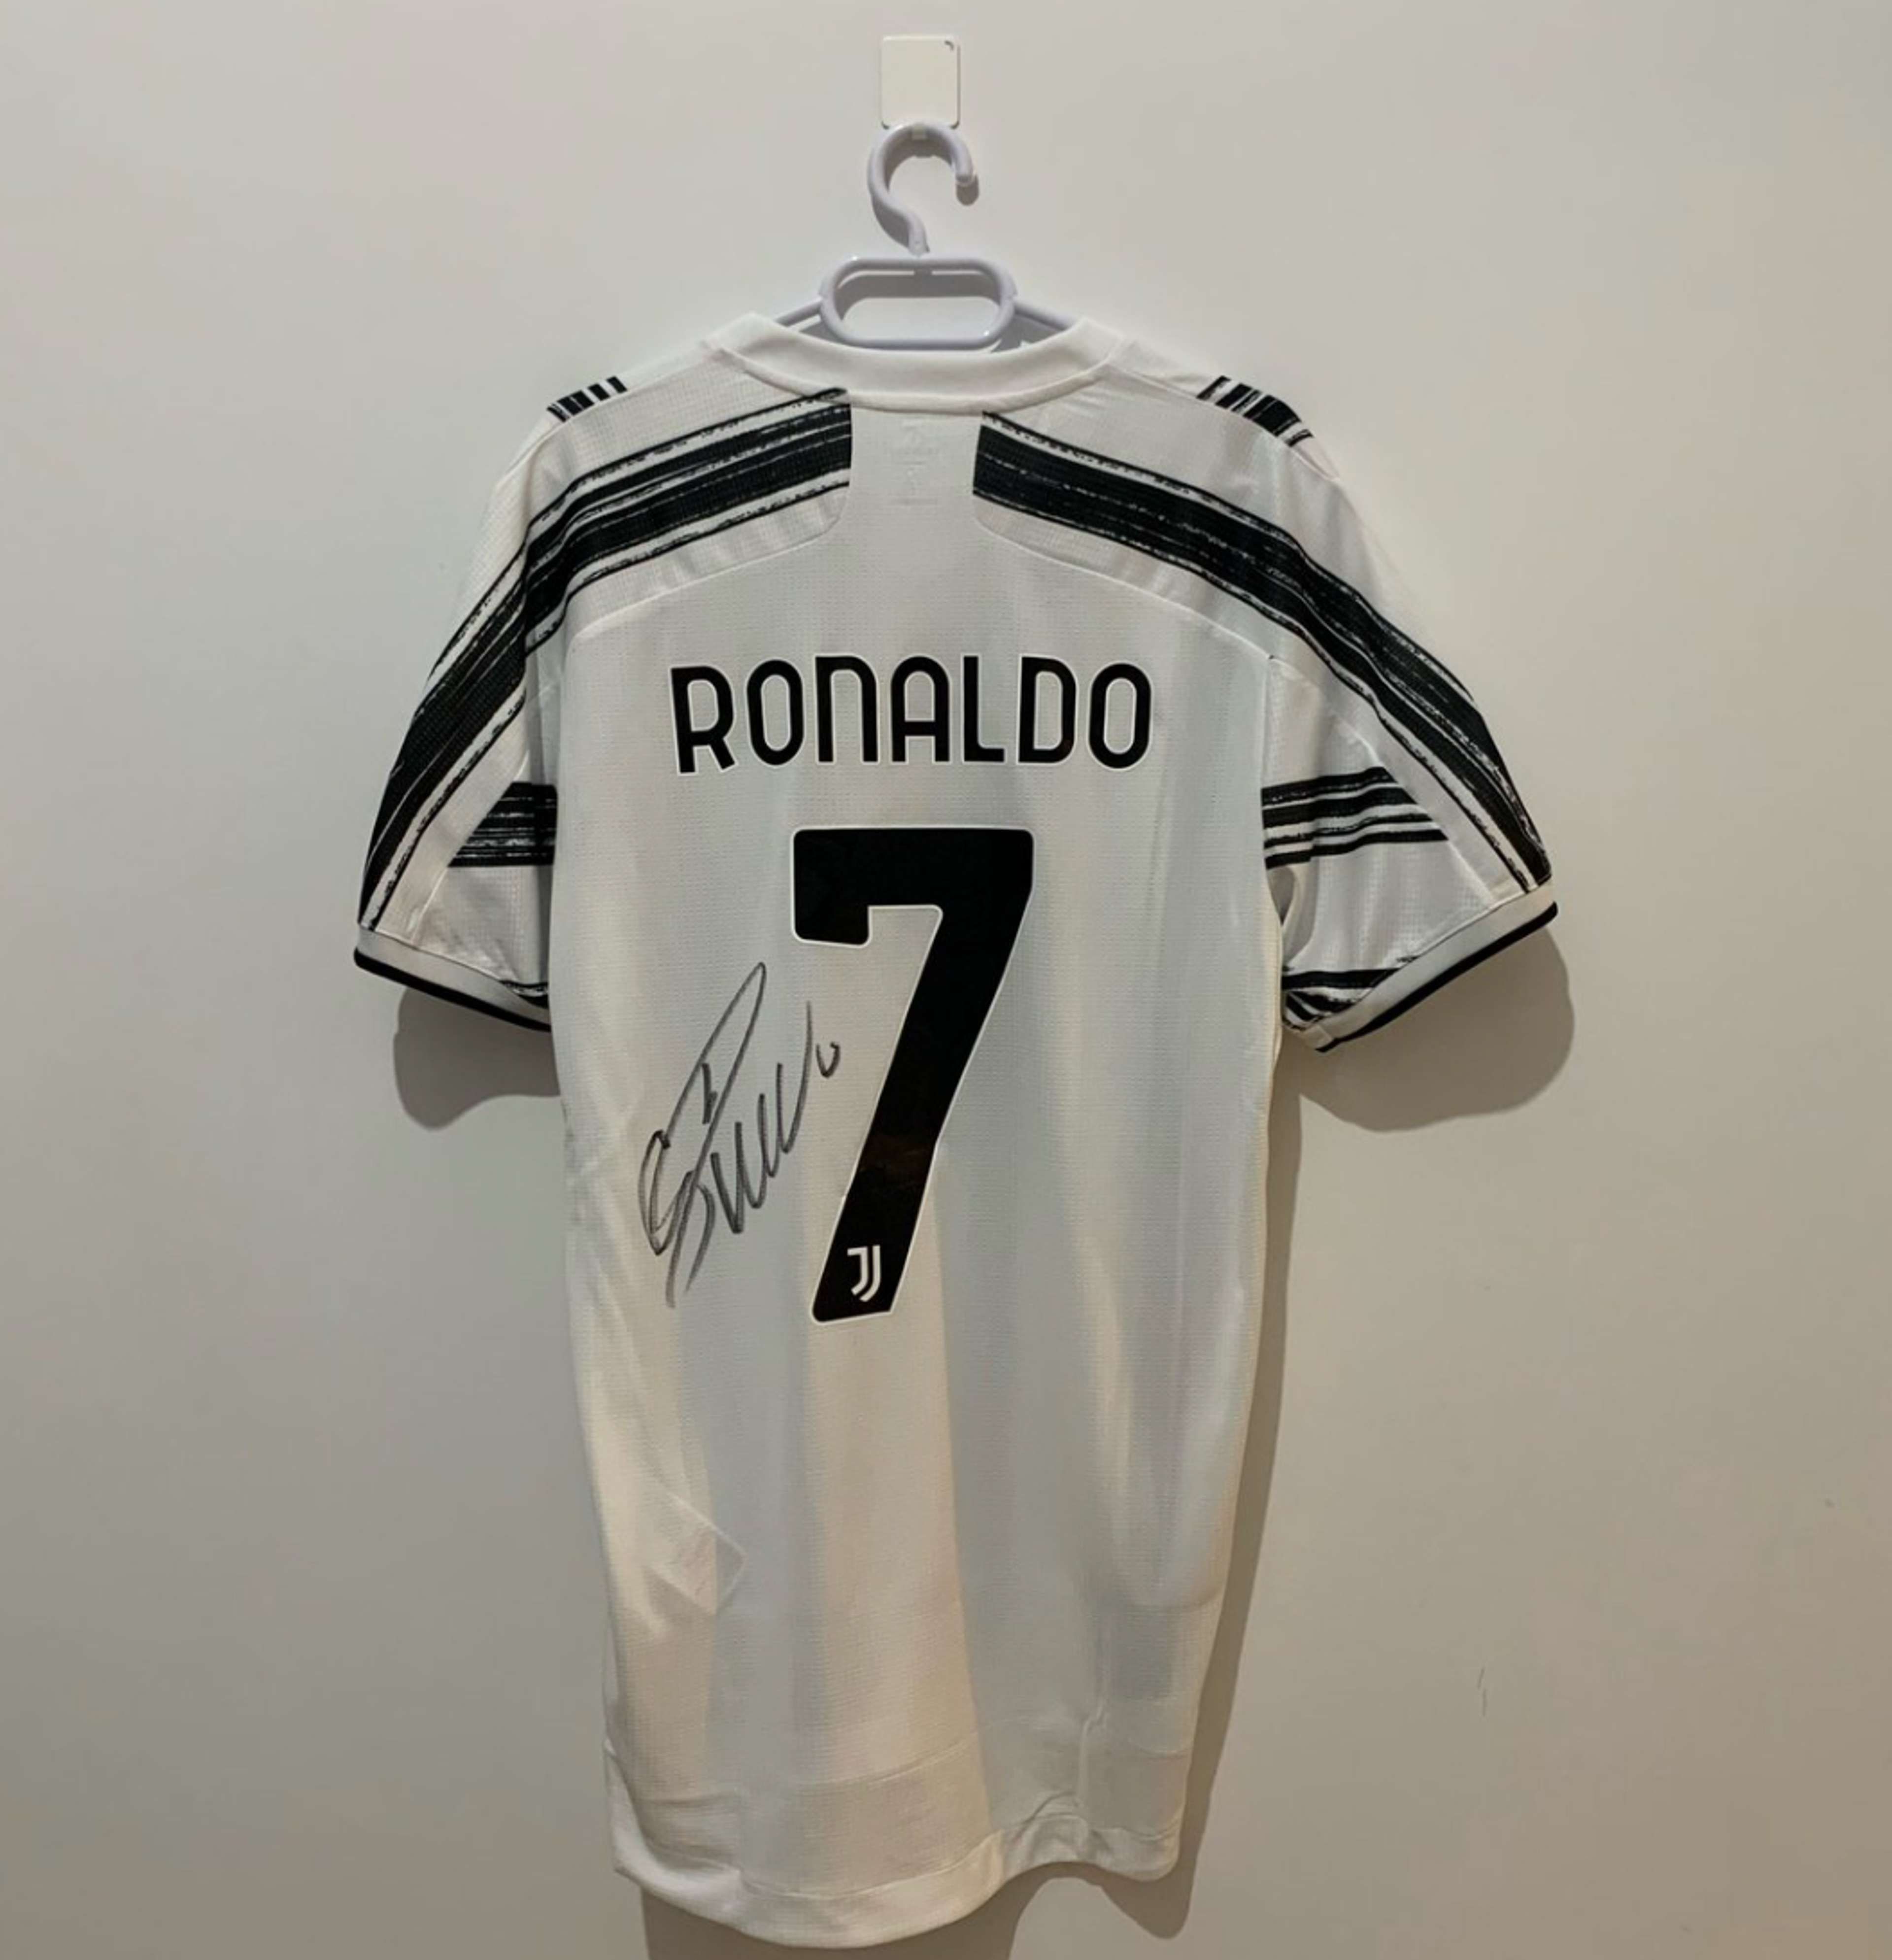 Ronaldo signed kit screenshot